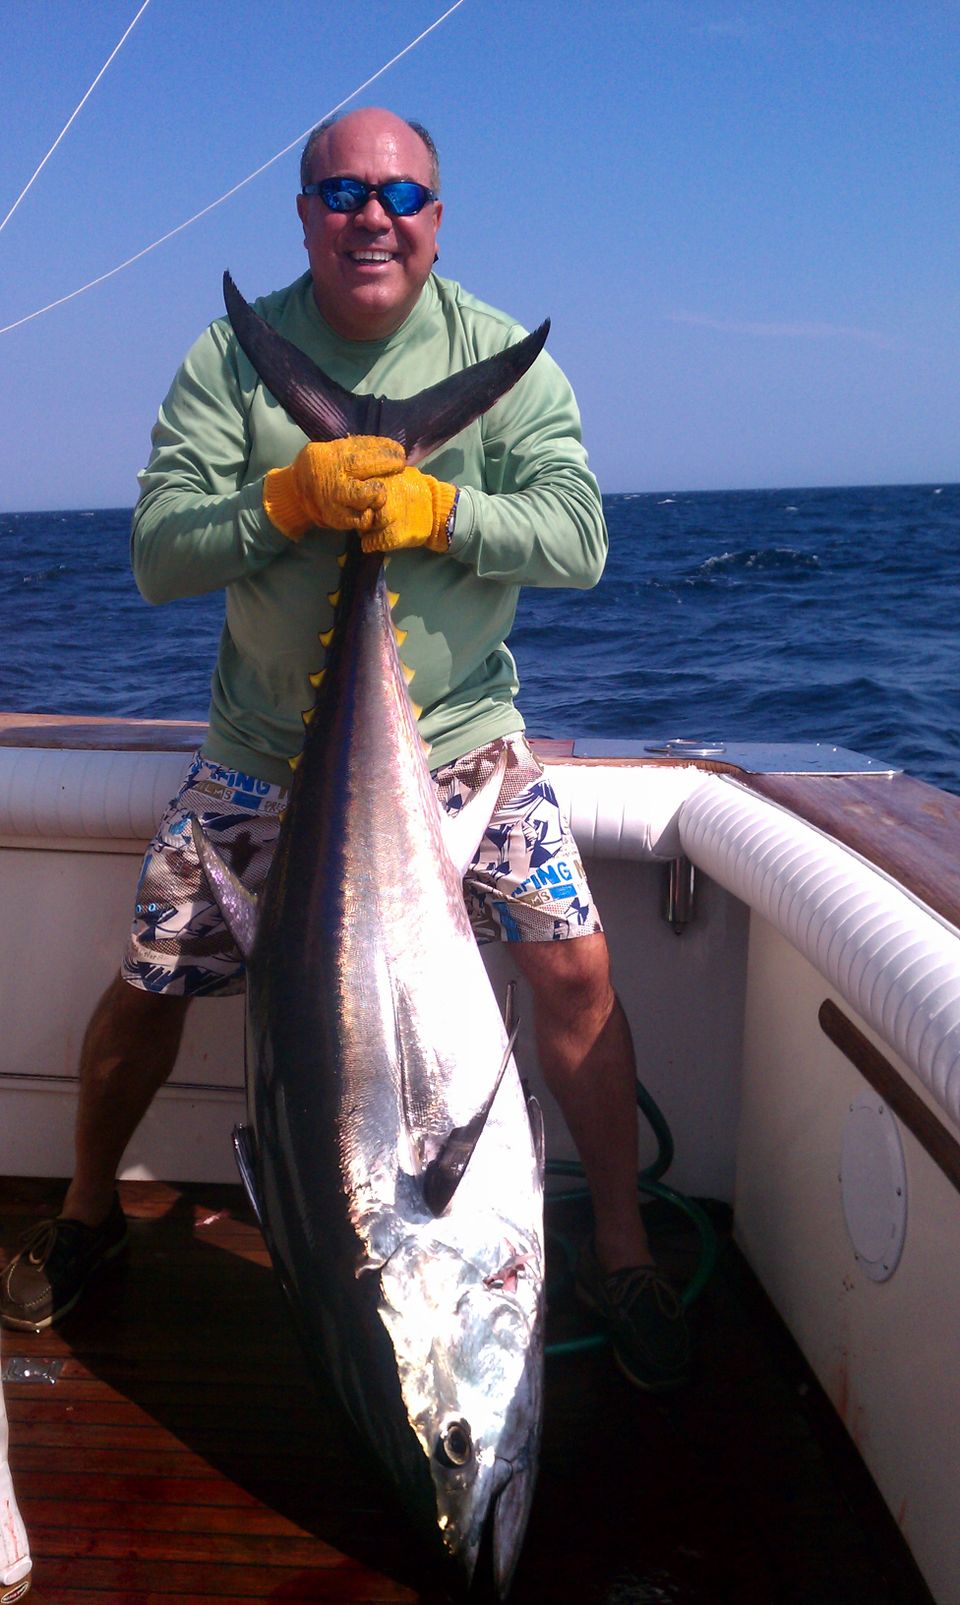 Man on boat holding tuna